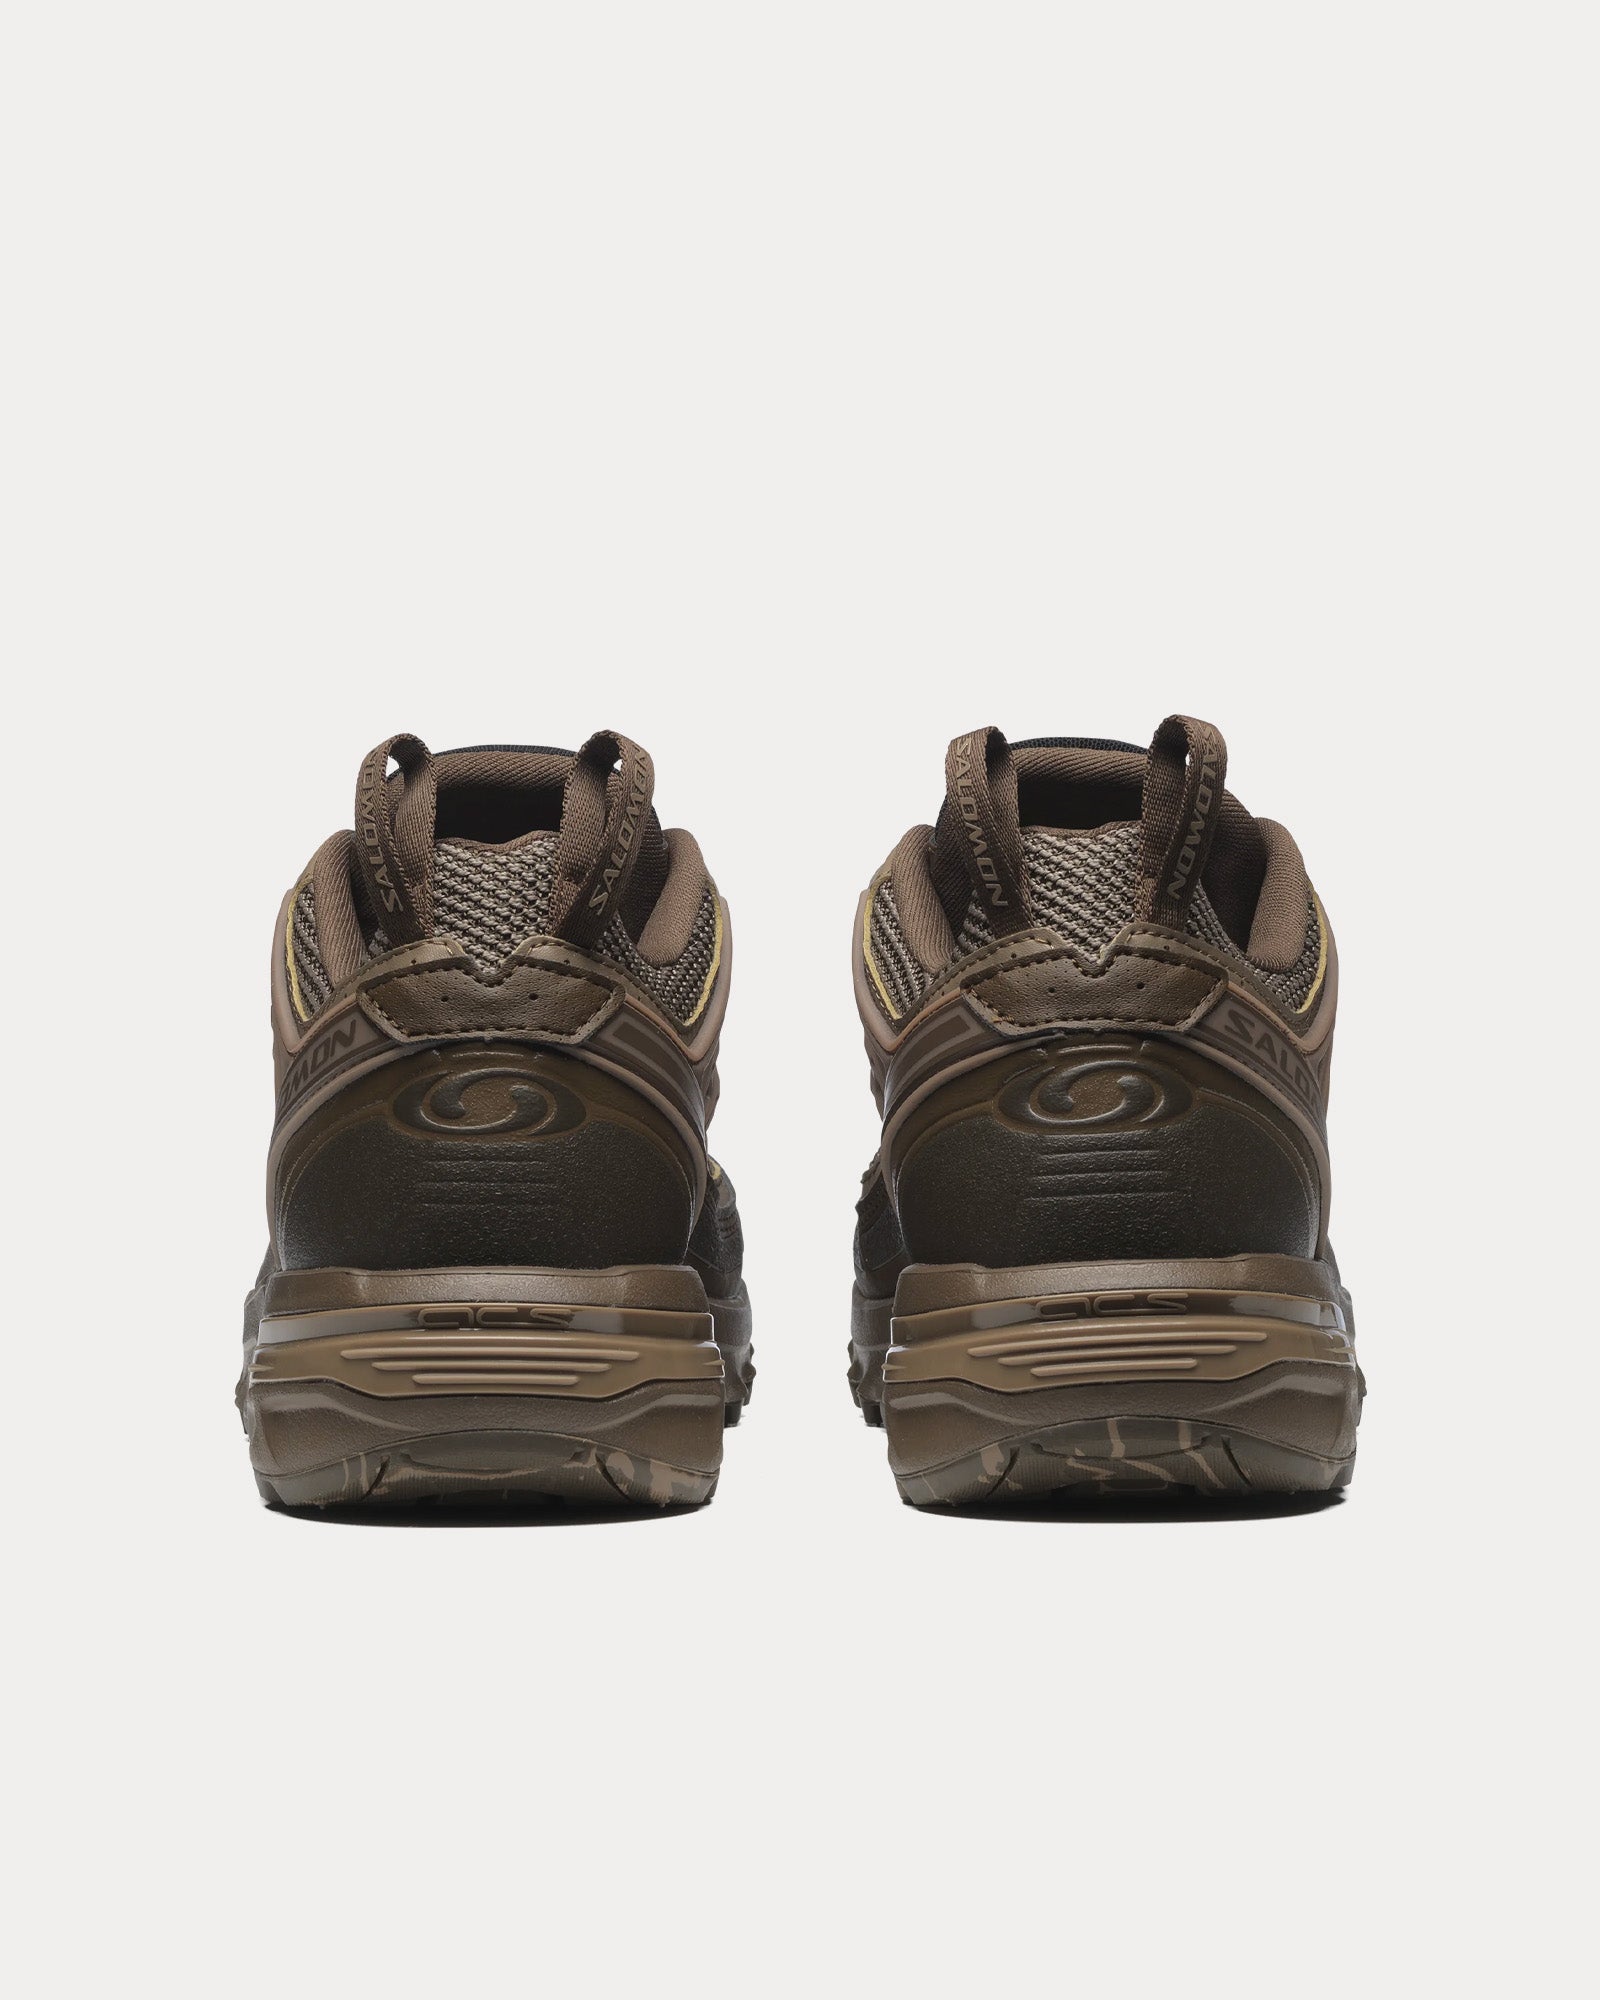 Salomon - ACS Pro Desert Dark Earth / Caribou / Wren Low Top Sneakers